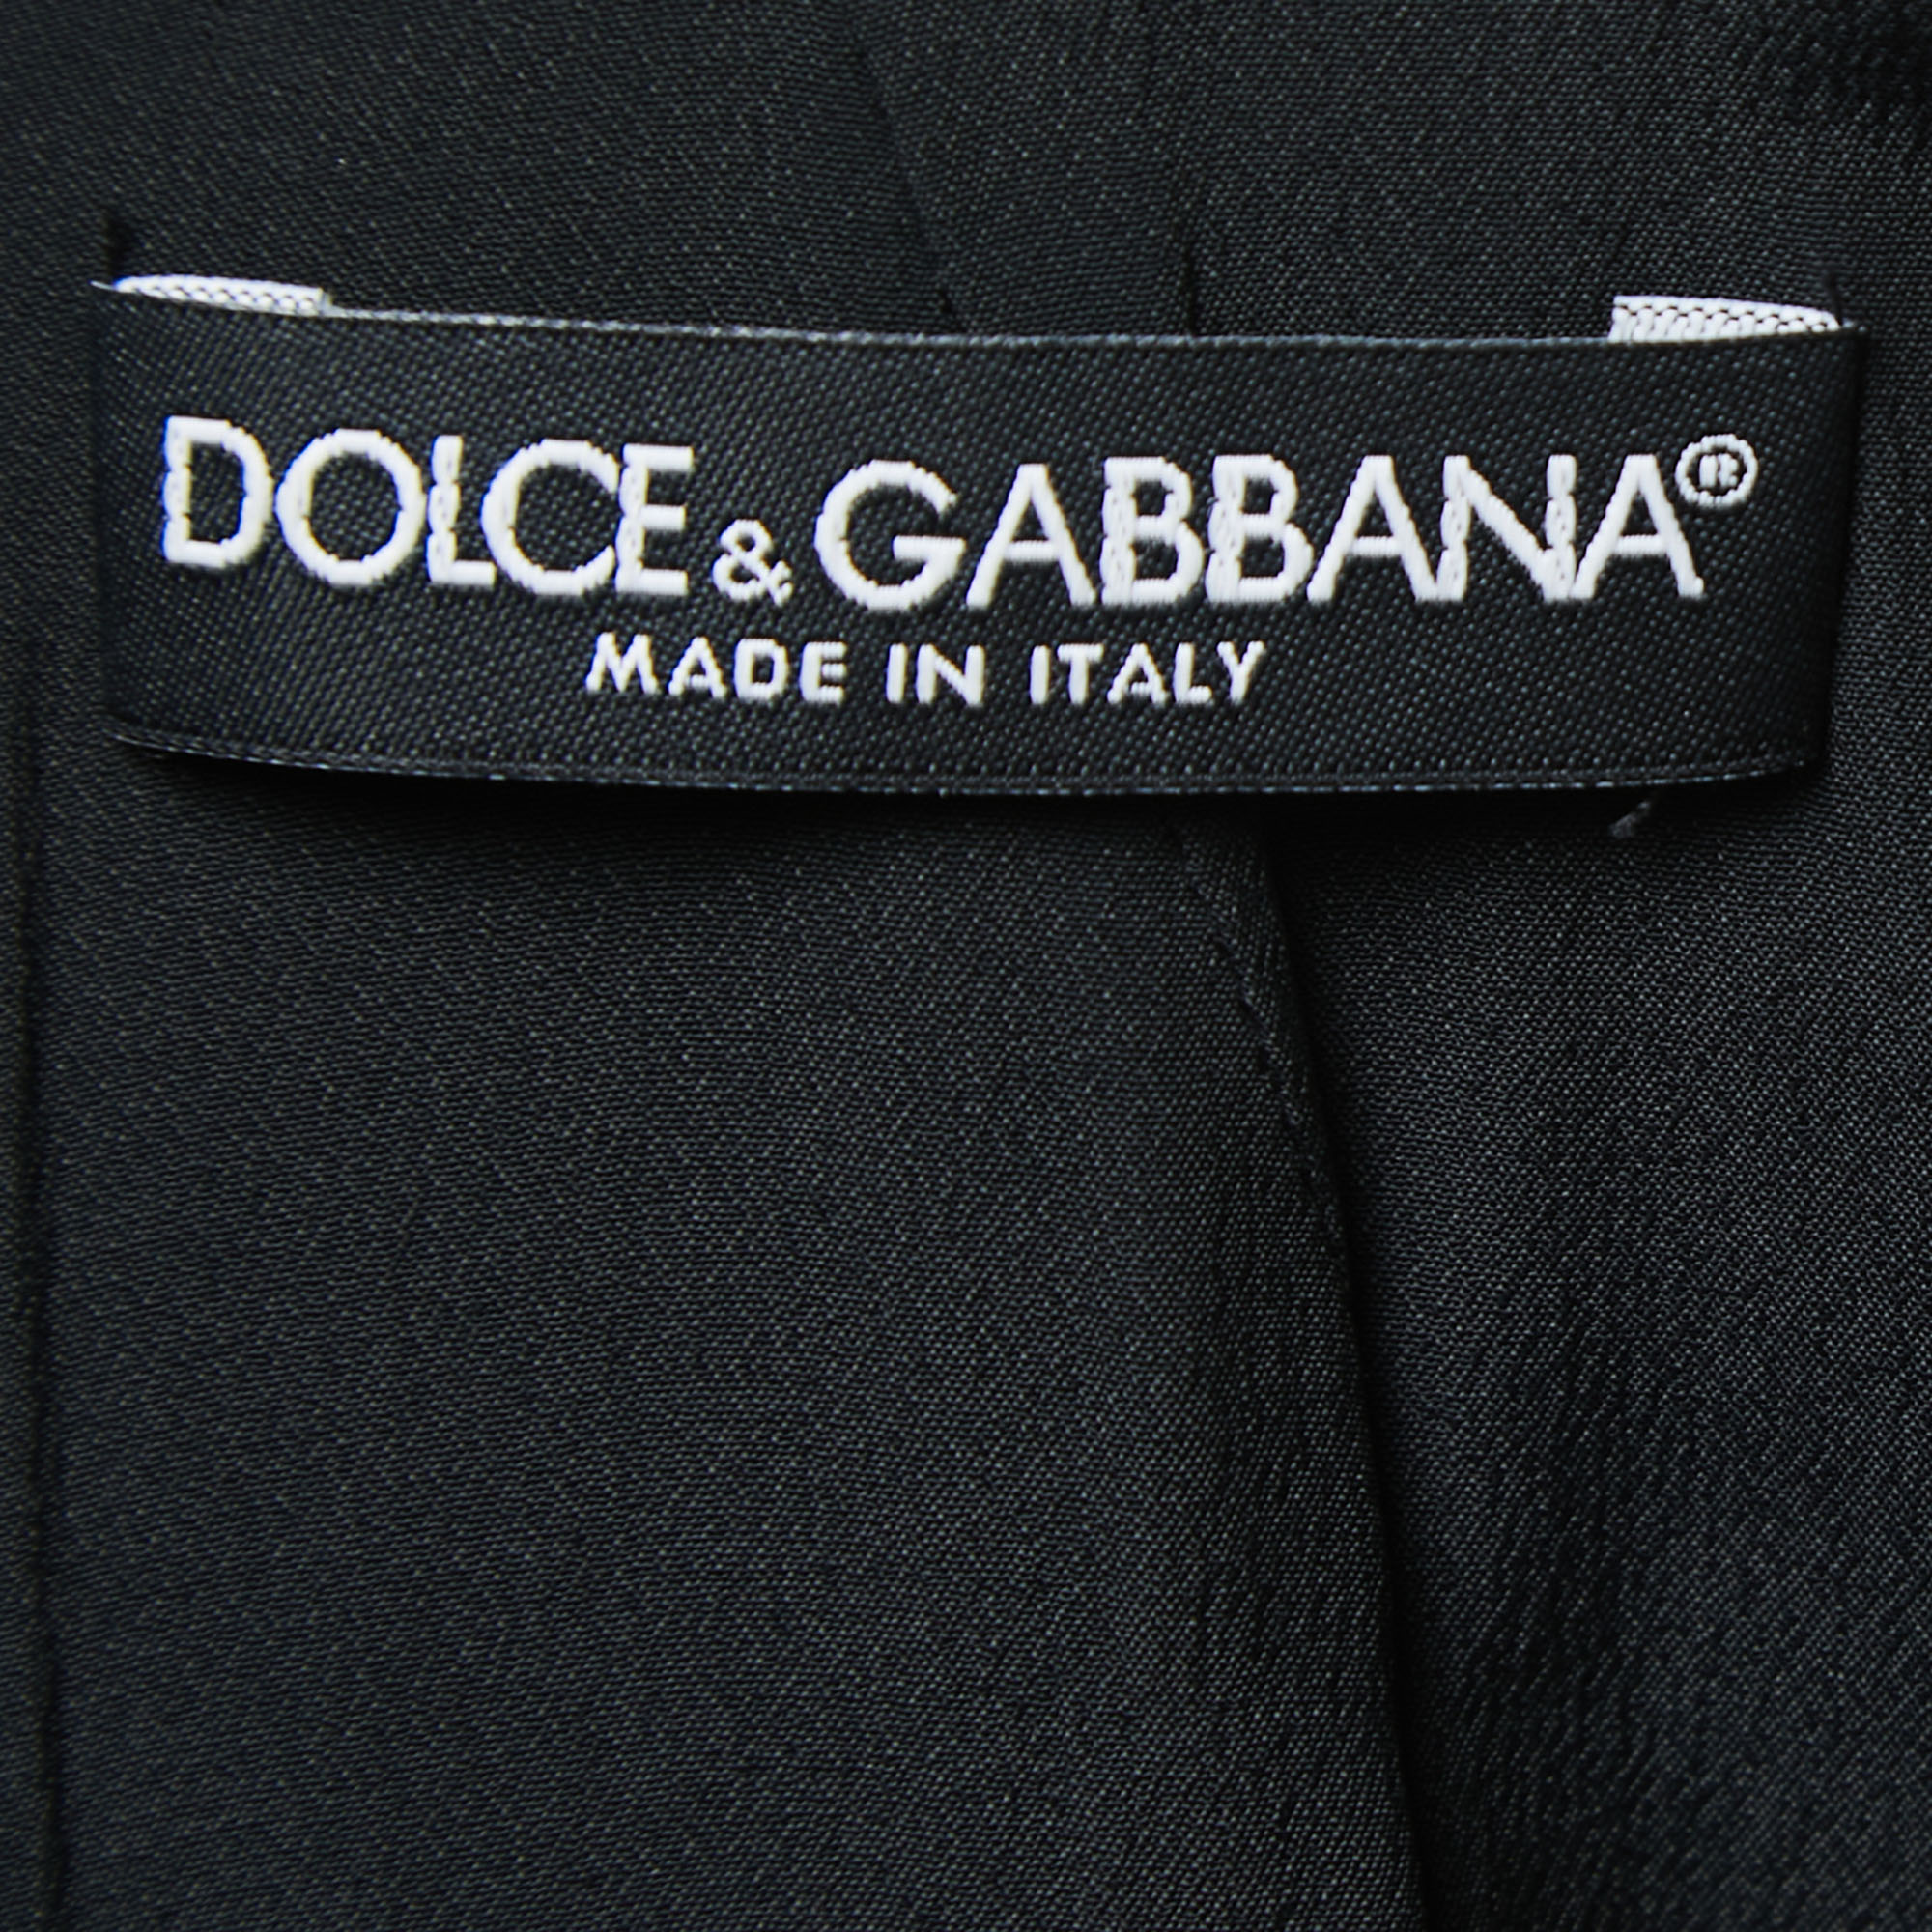 Dolce & Gabbana Black/White Striped Jacquard Cotton Sleeveless Midi Dress XS